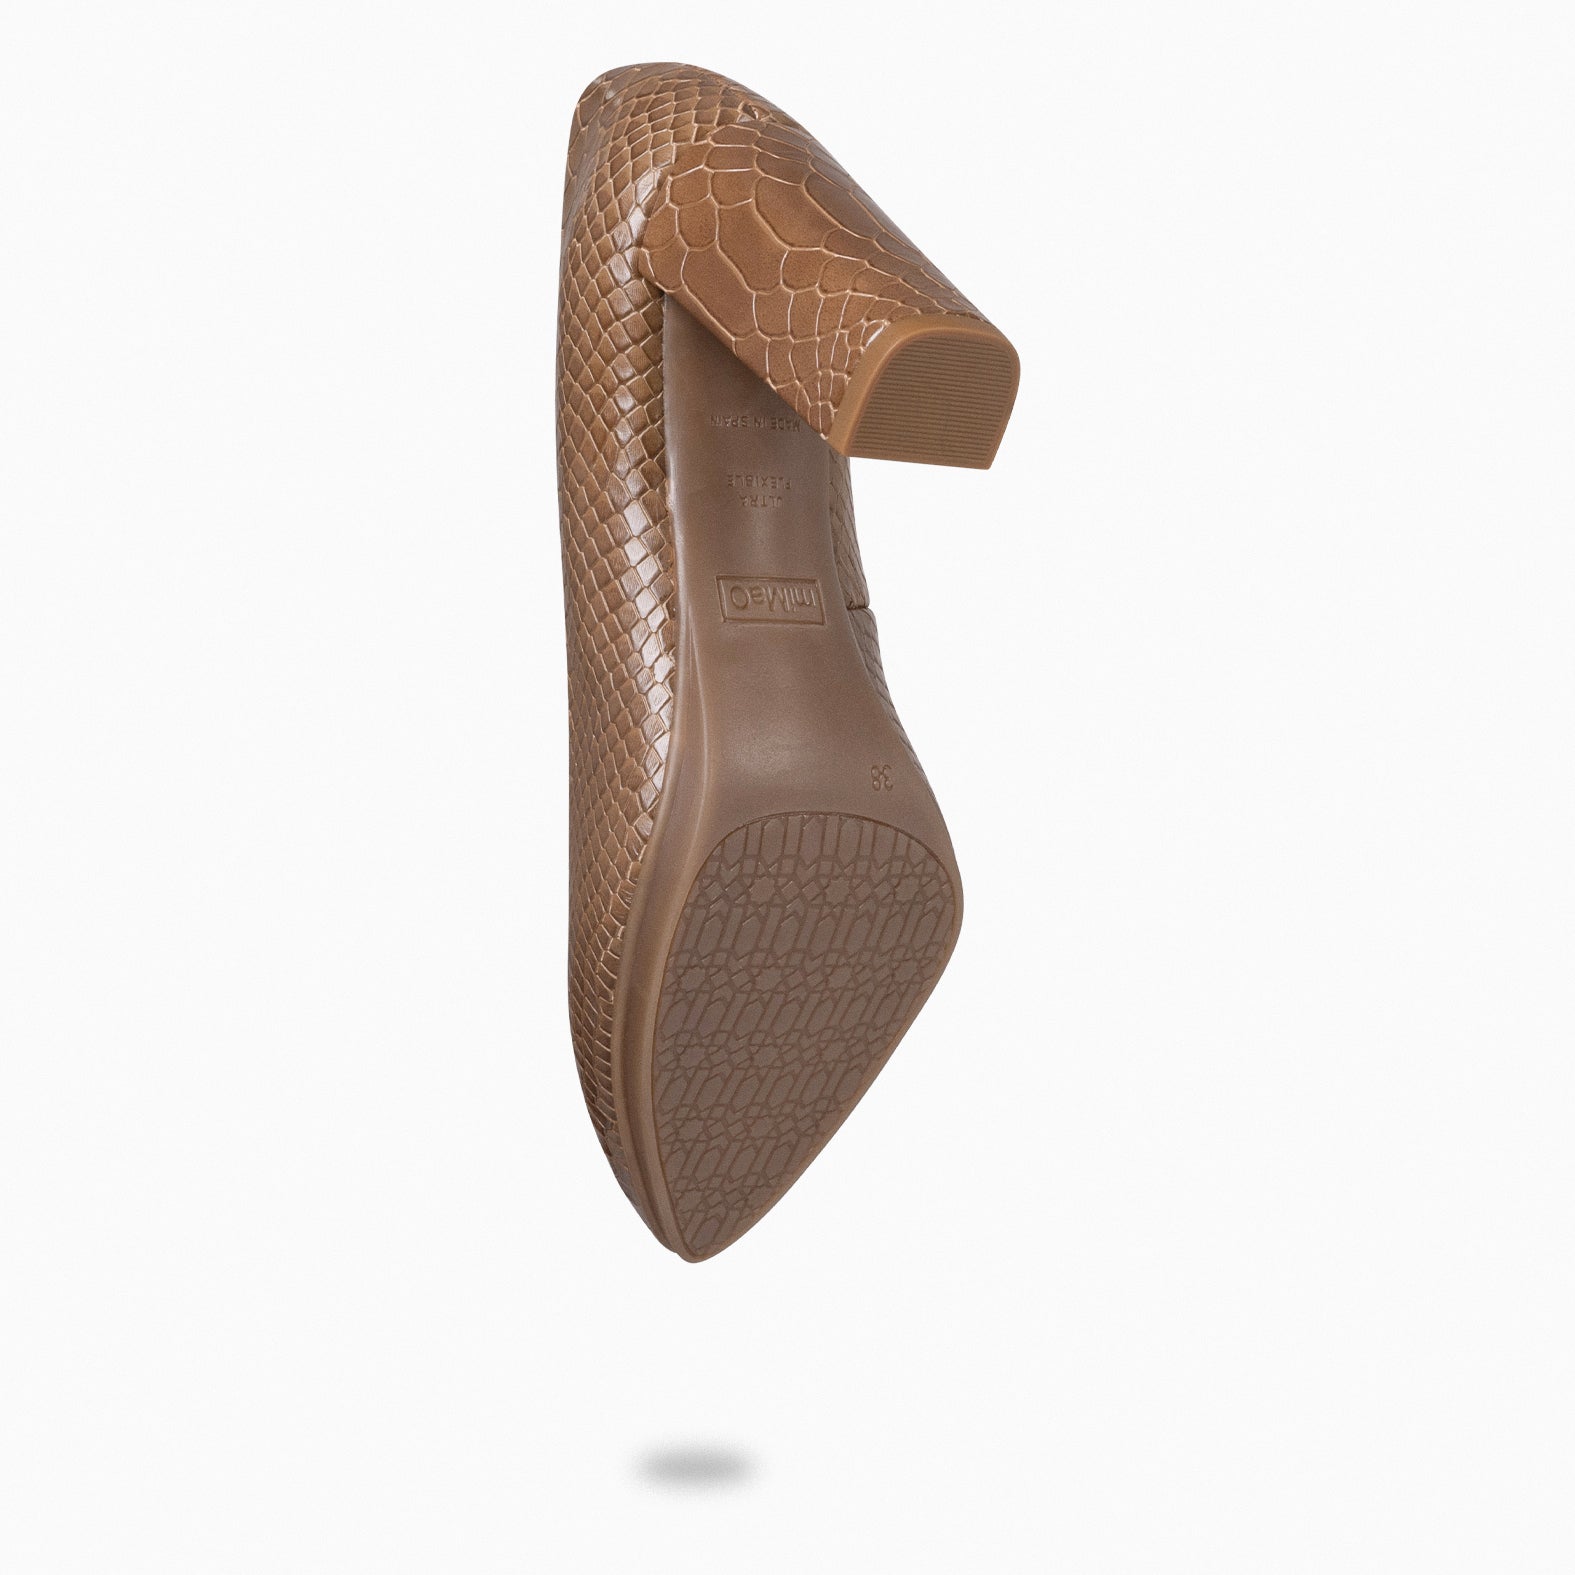 URBAN SAUVAGE - Zapatos de salón con textura de serpiente TAUPE